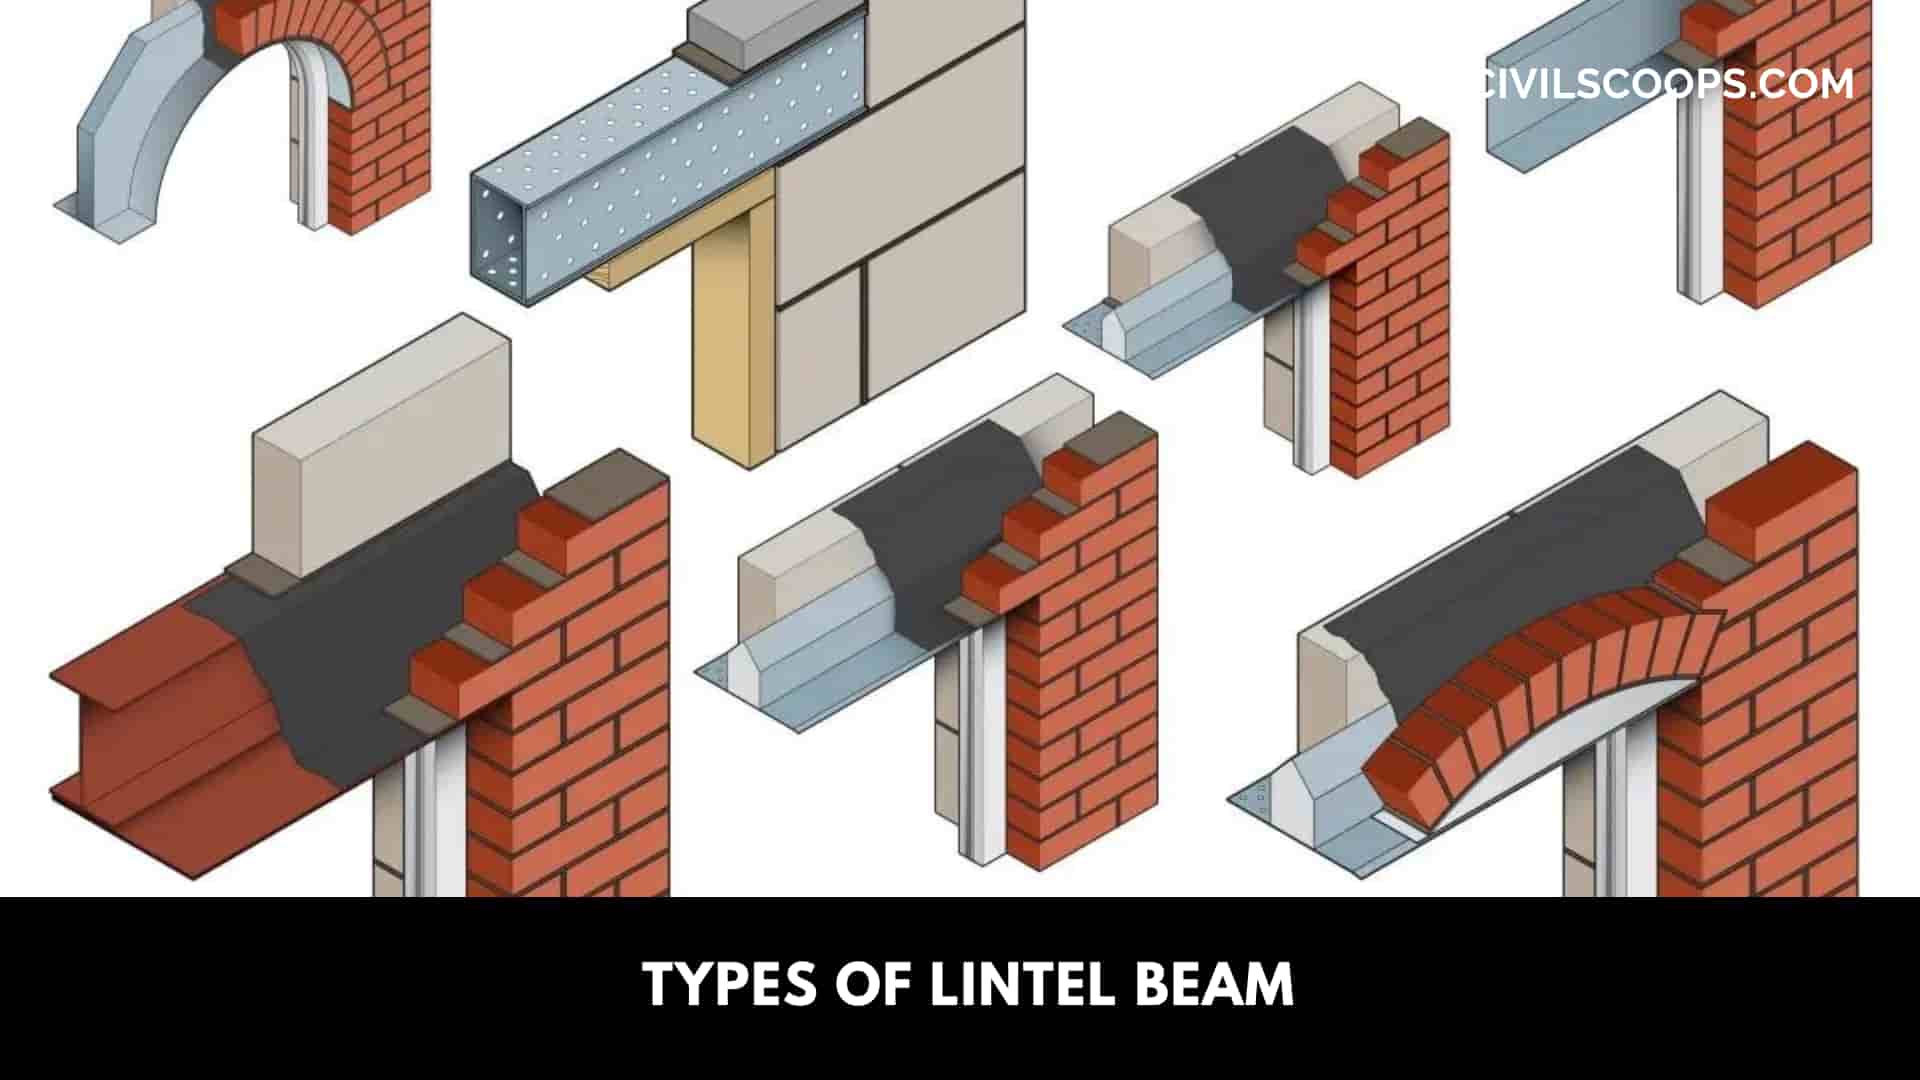 Types of Lintel Beam